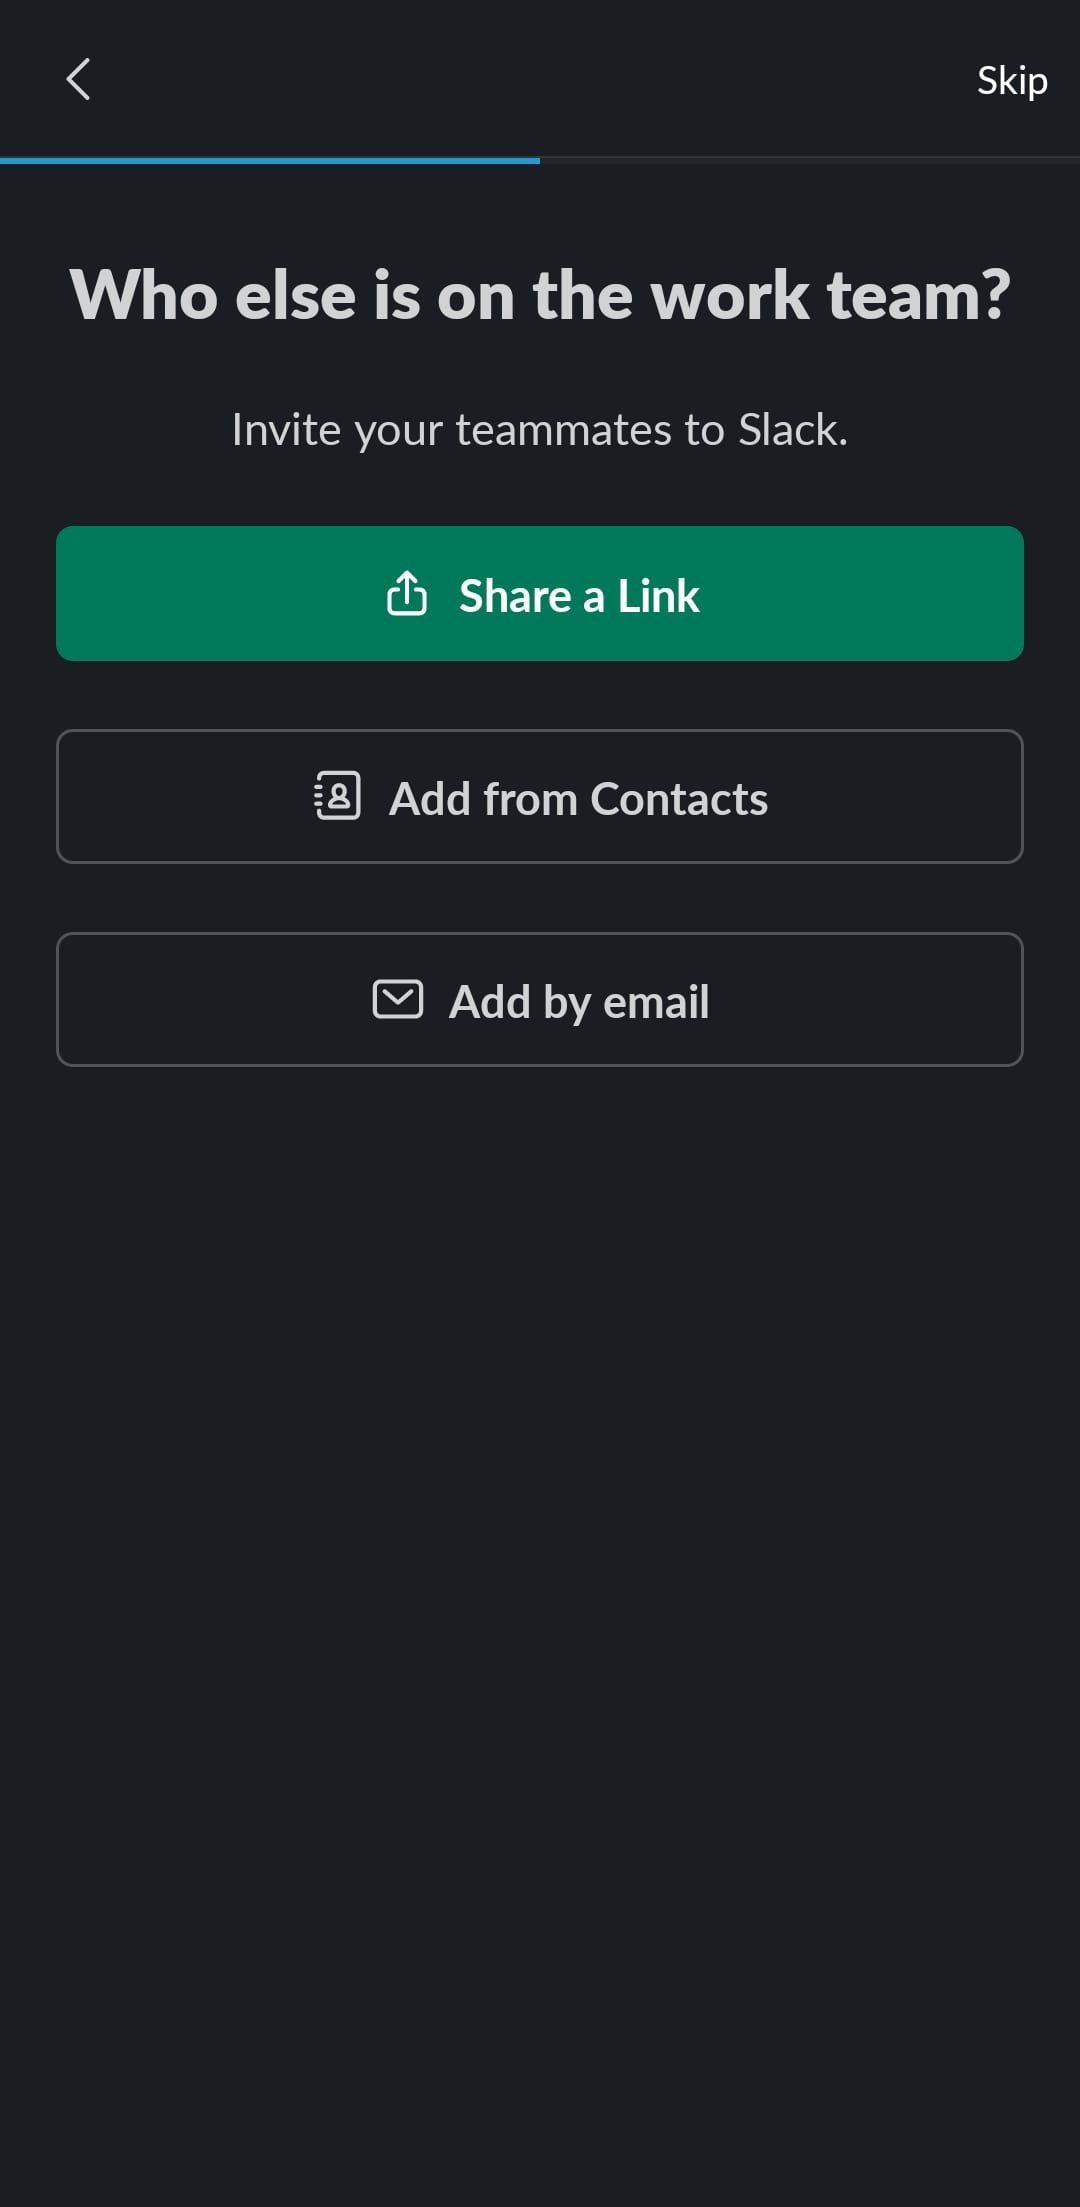 Invite teammates menu on the Slack mobile app